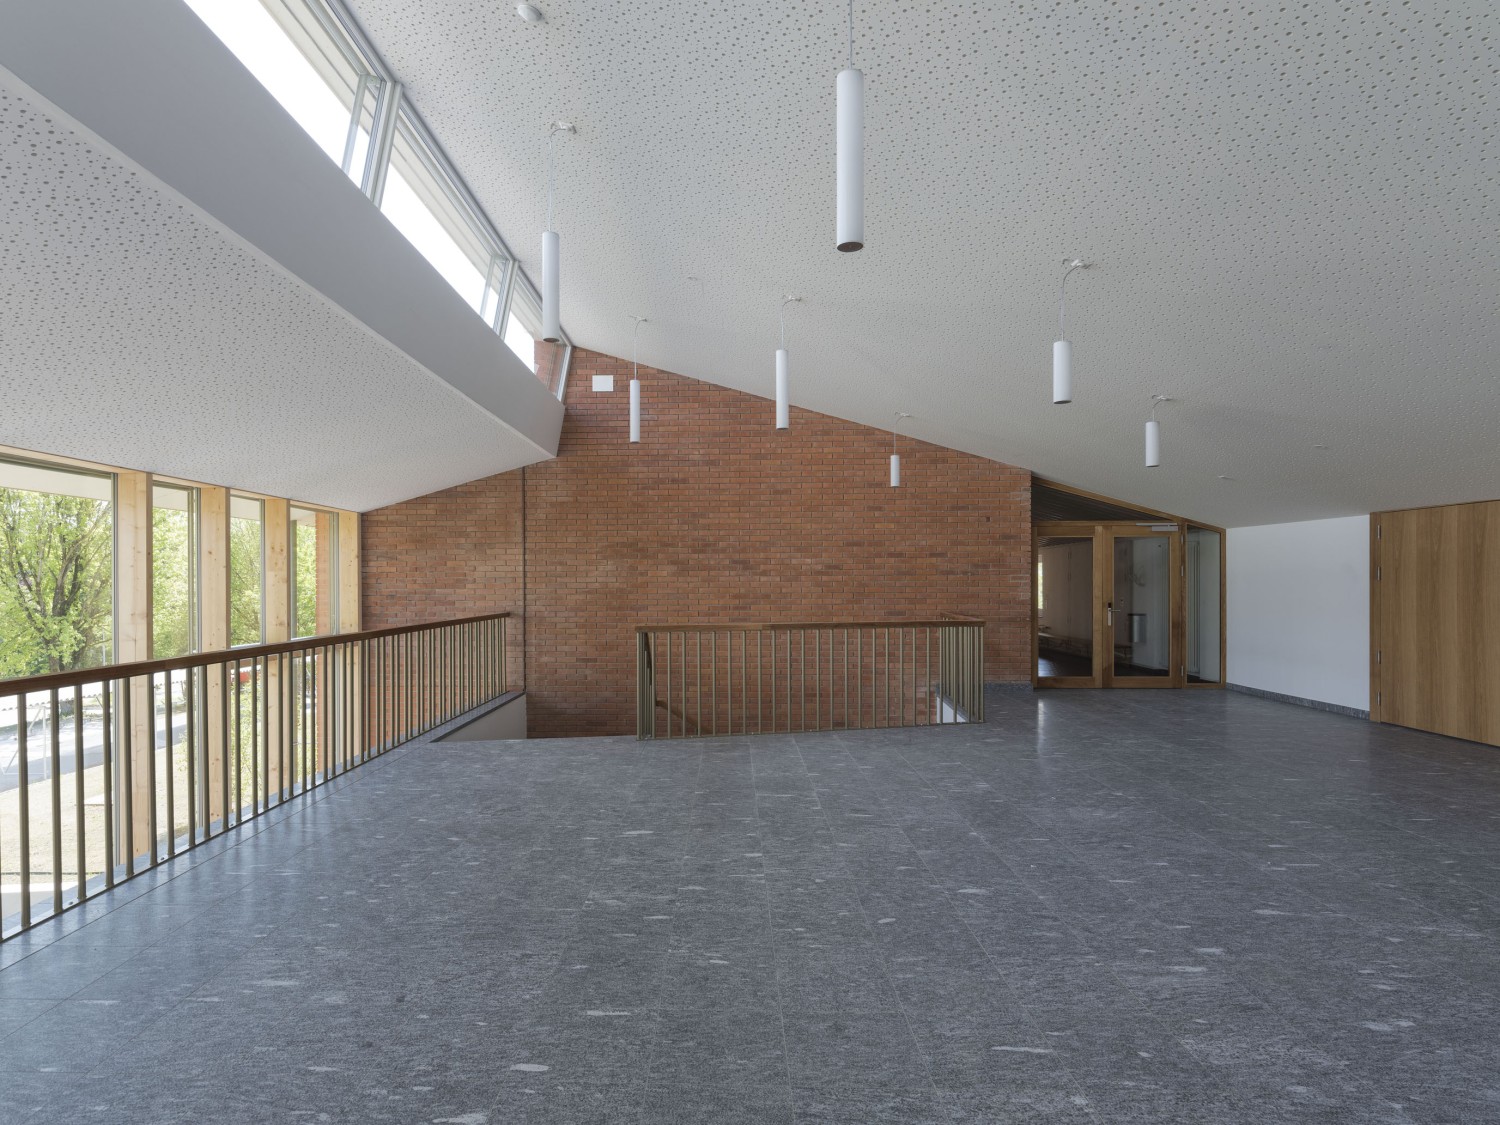 HUMMBURKART ARCHITEKTEN: Neubau Sekundarschule in Obfelden